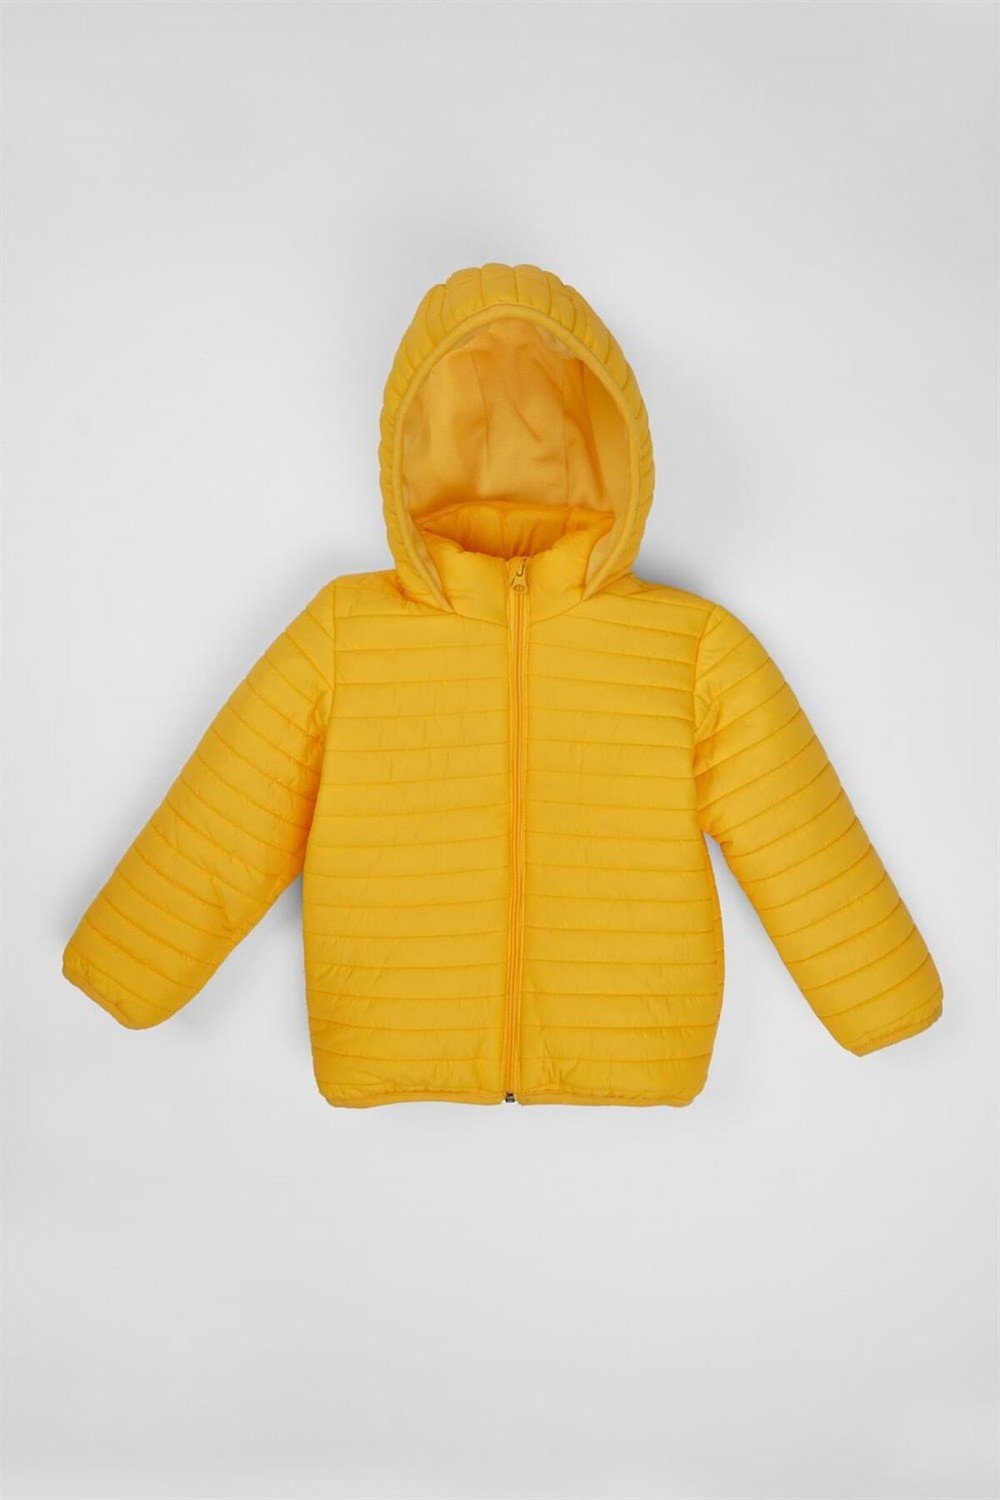 zepkids Boy's Yellow Colored Hooded Coat with Fleece Inside